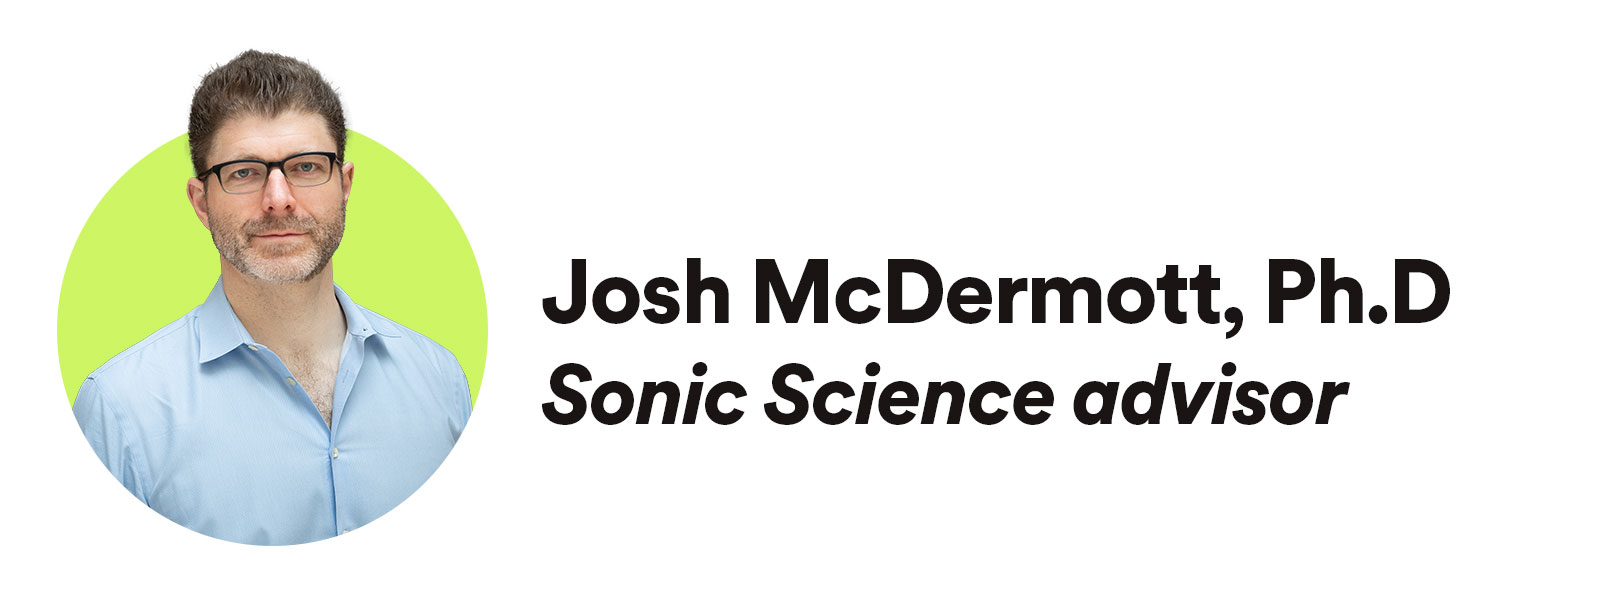 SAS-SonicScience-BackstagePass-JoshMcDermott-Inline